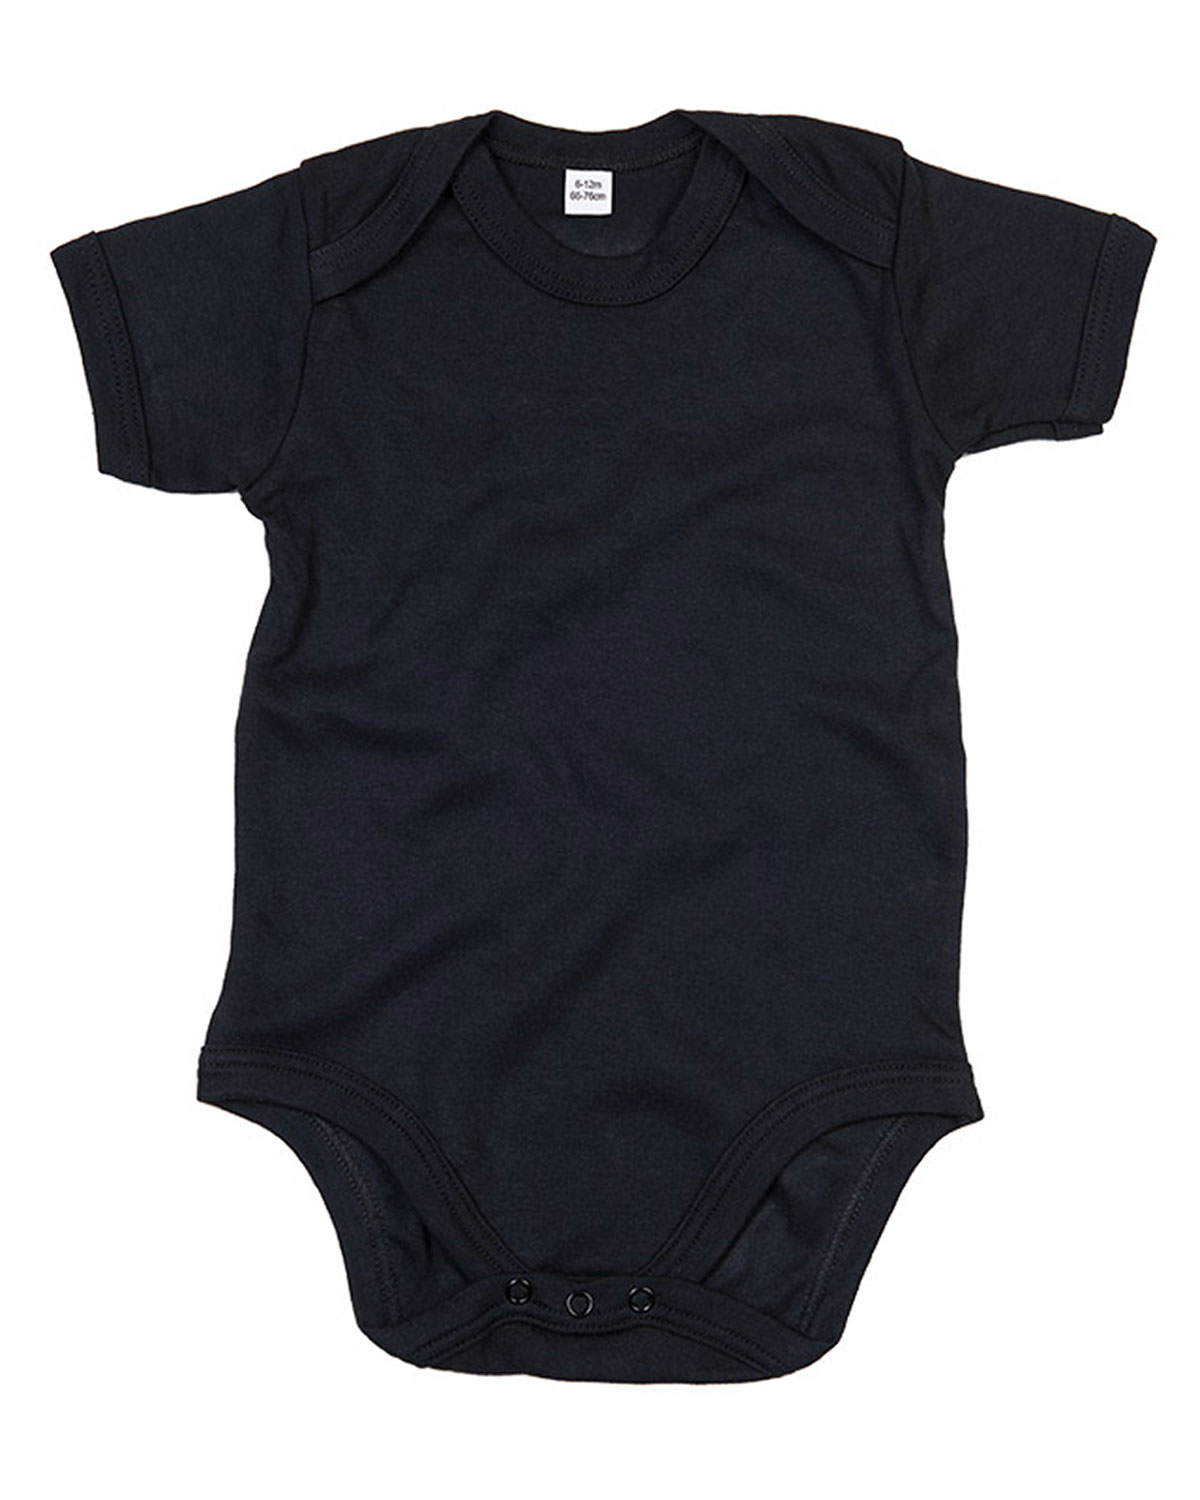 Baby Strampler Bodysuit Black 86